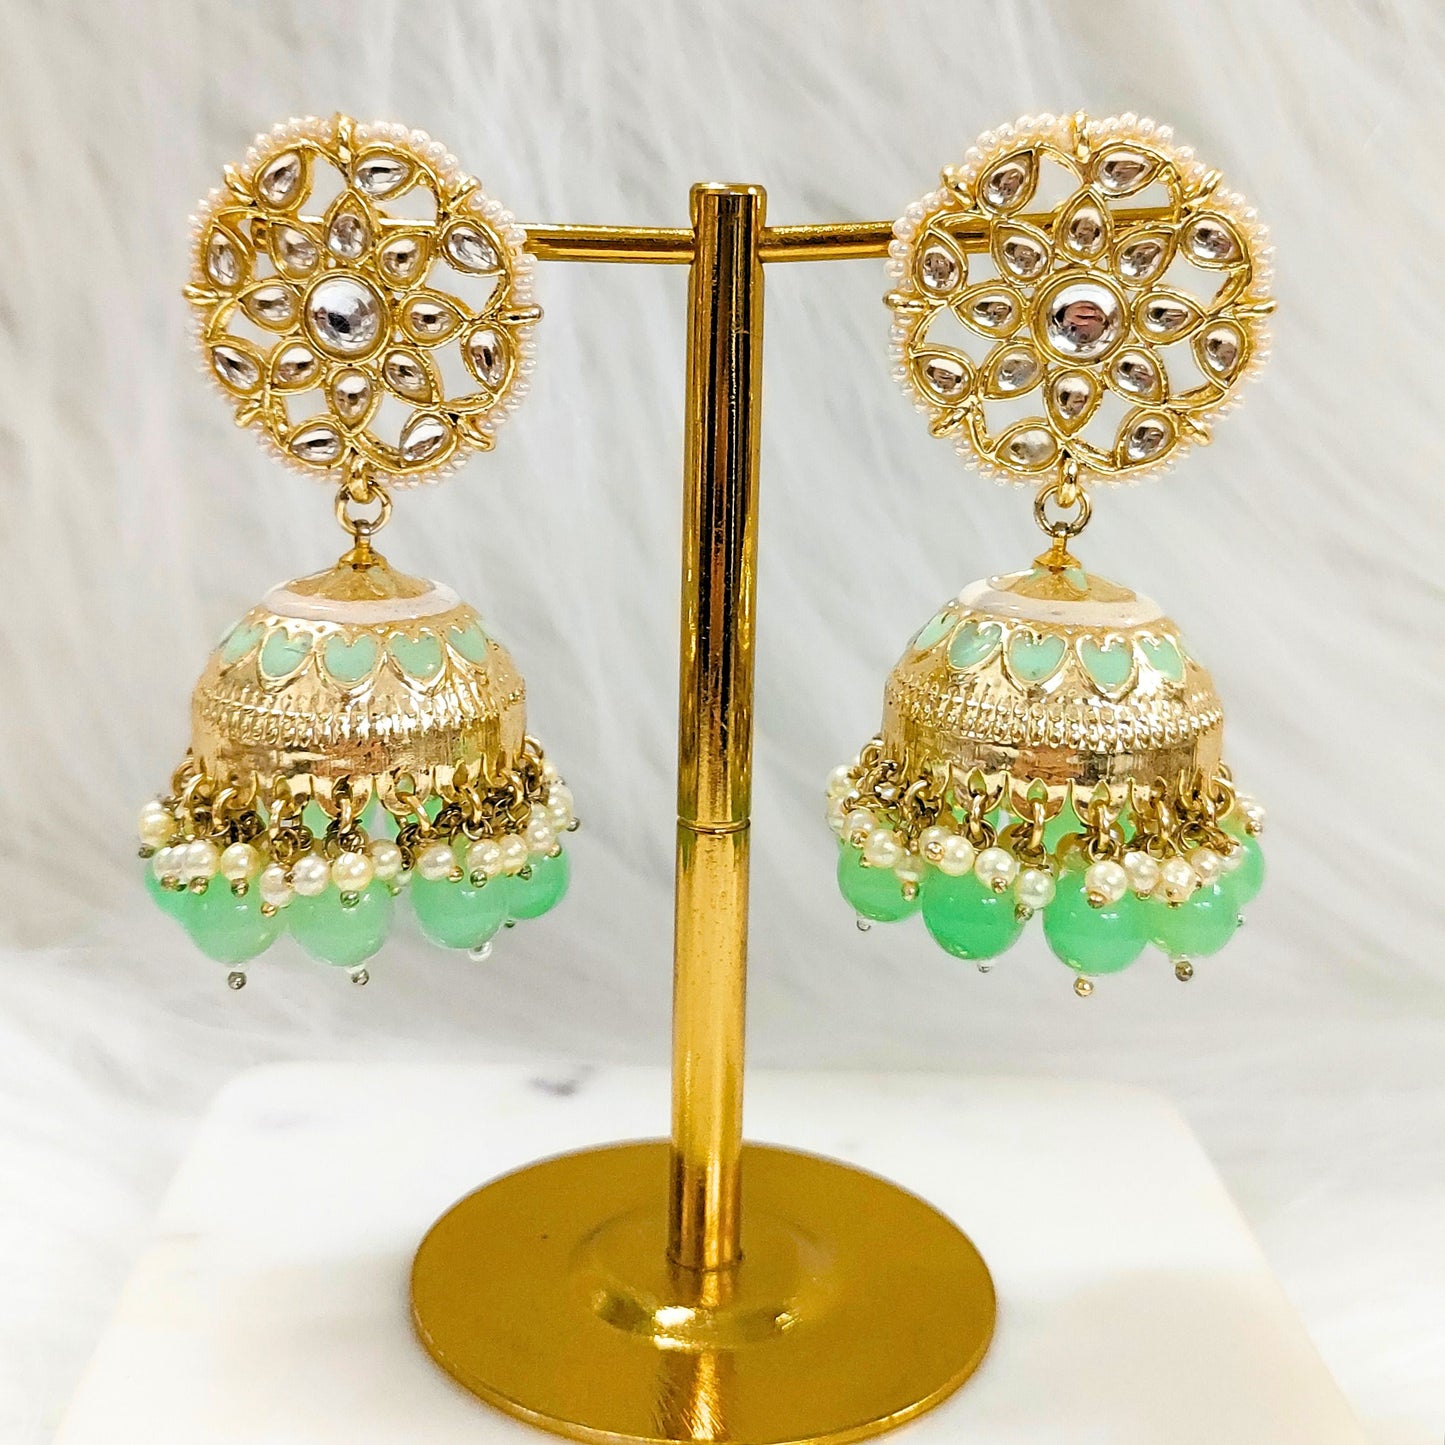 Bdiva 18K Gold Plated Kundan Jhumka Earrings with Sage Green Semi Cultured Pearls